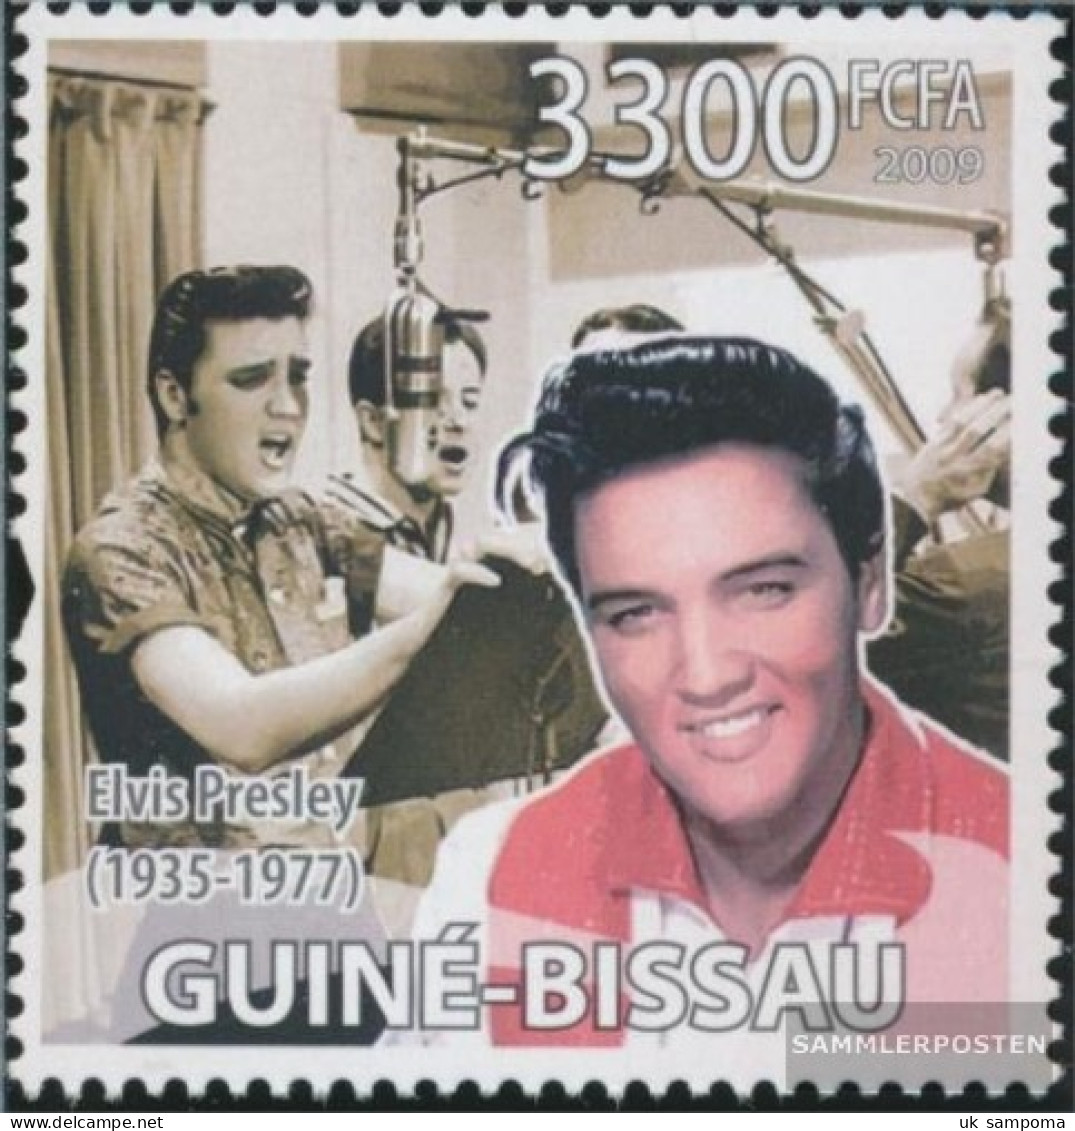 Guinea-Bissau 4290 (complete. Issue) Unmounted Mint / Never Hinged 2009 Elvis Presley - Guinea-Bissau